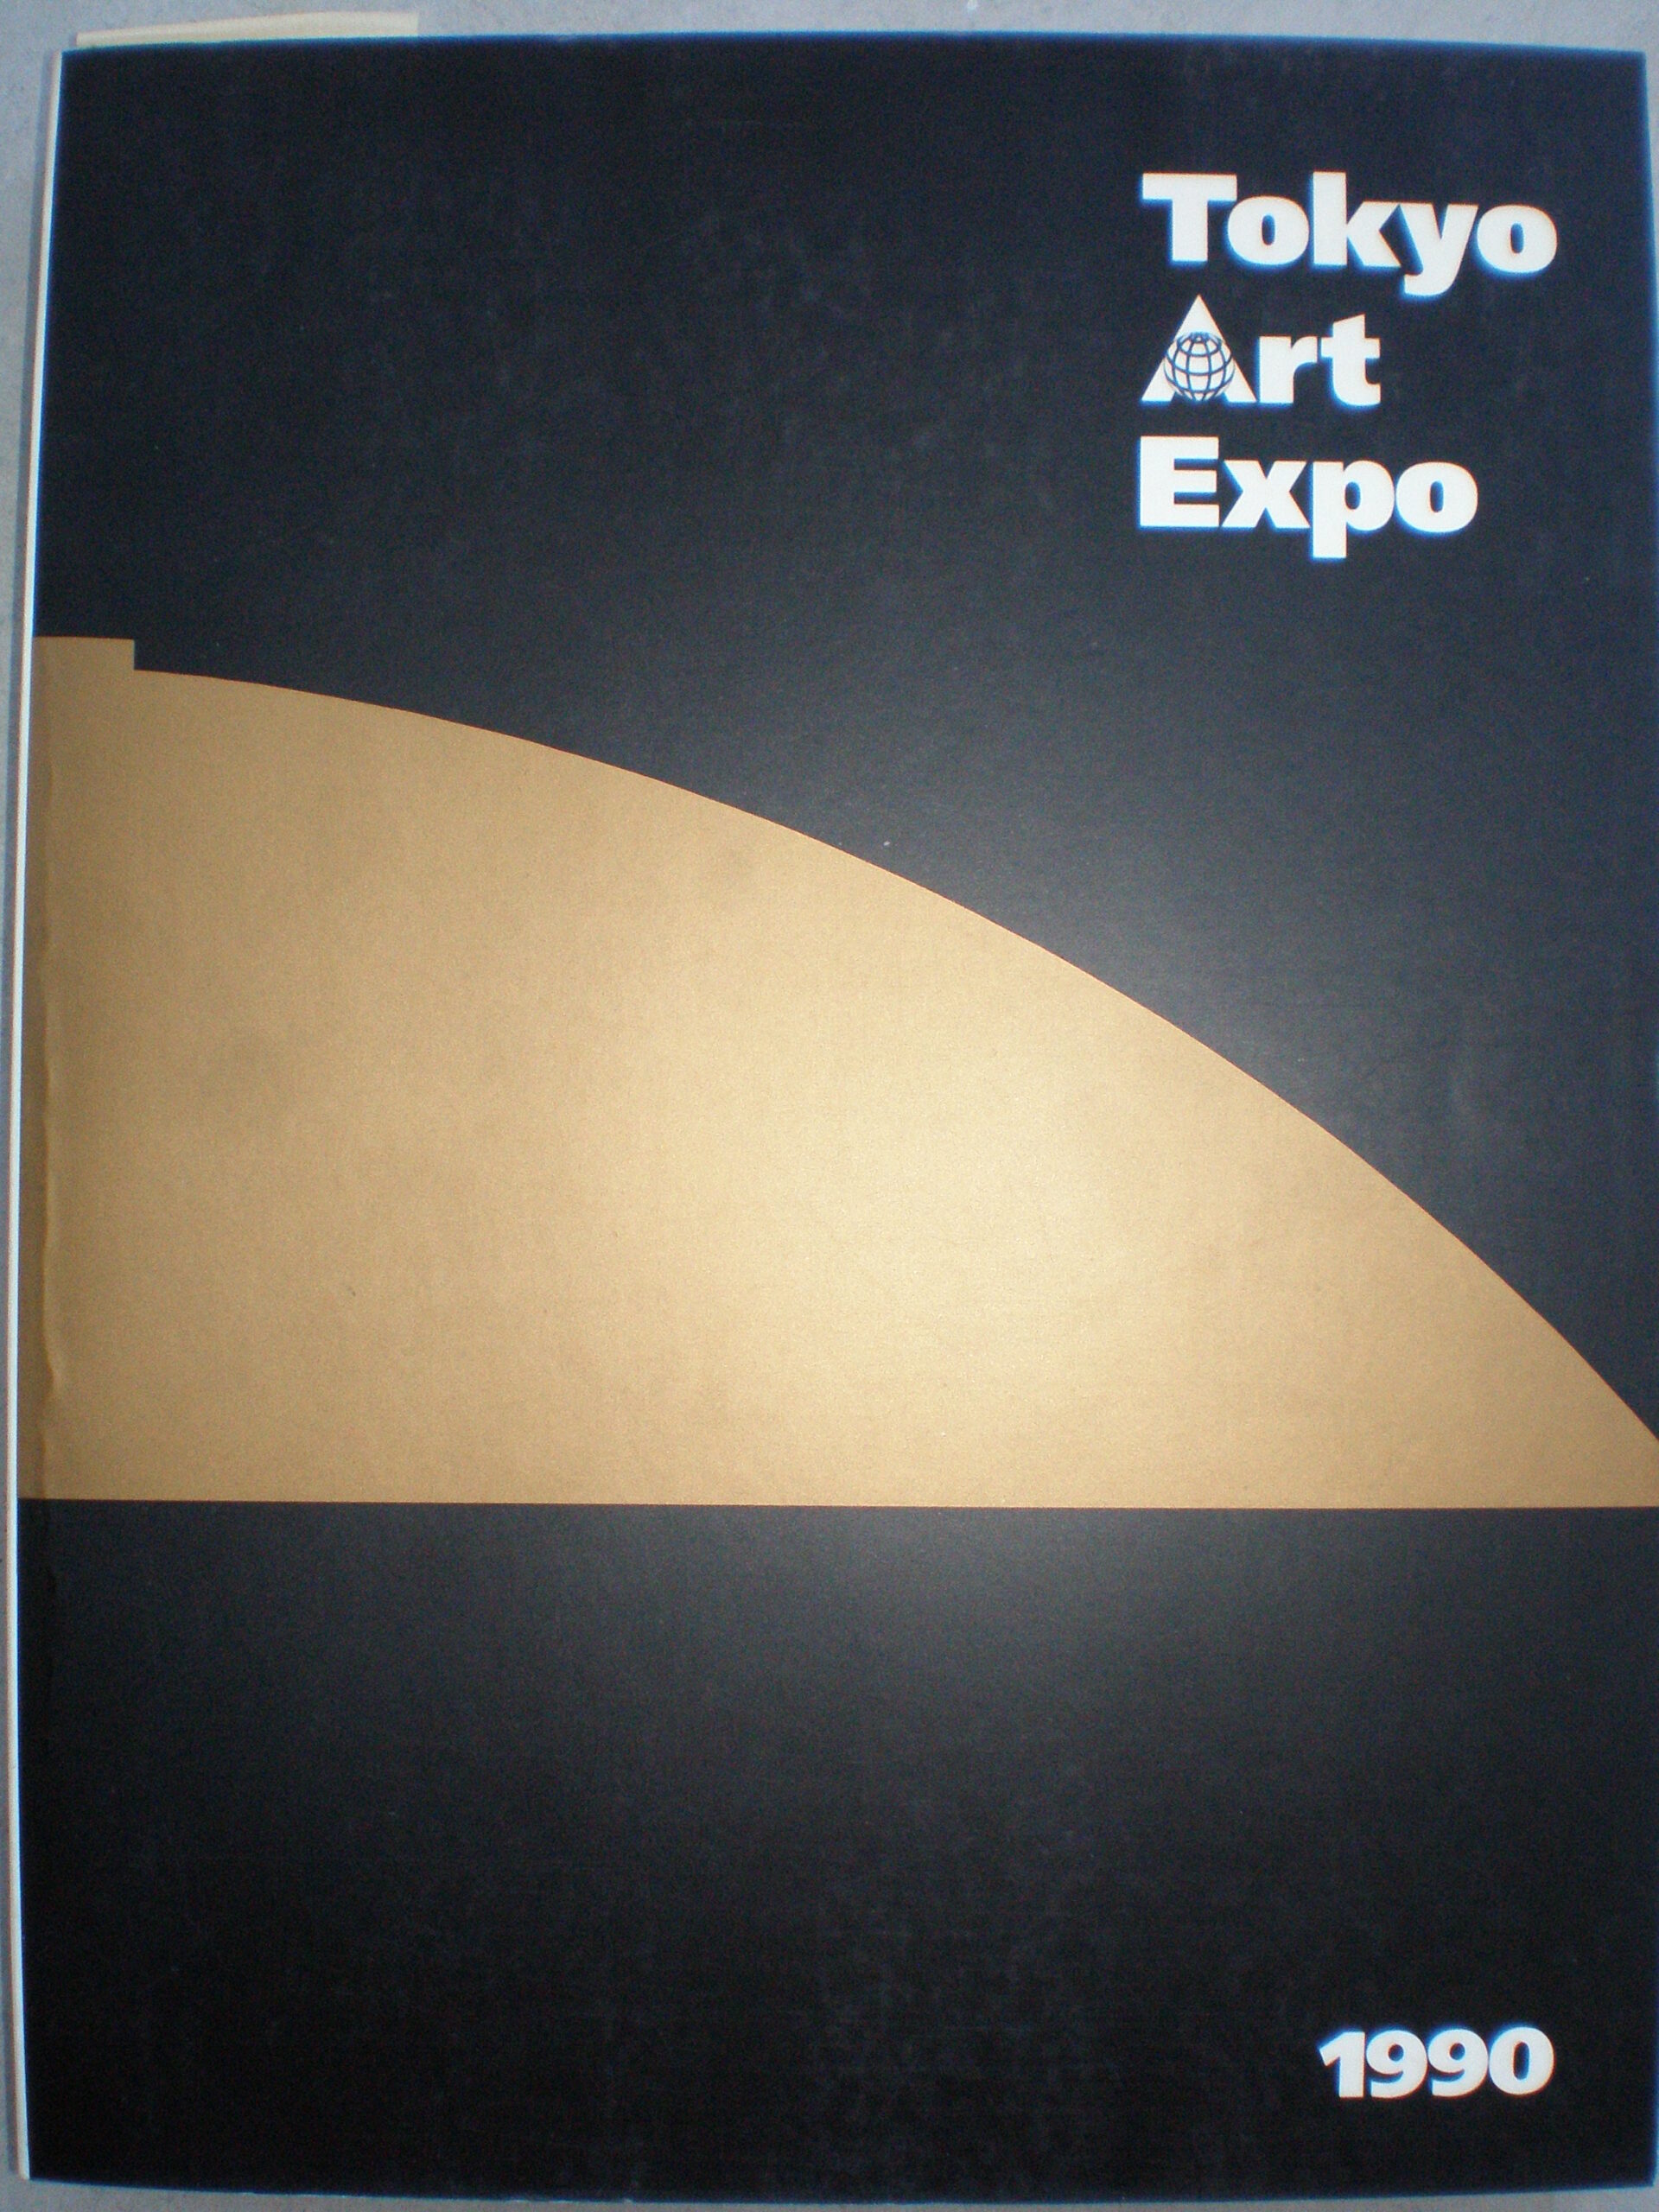 Tokyo art expo 1990.